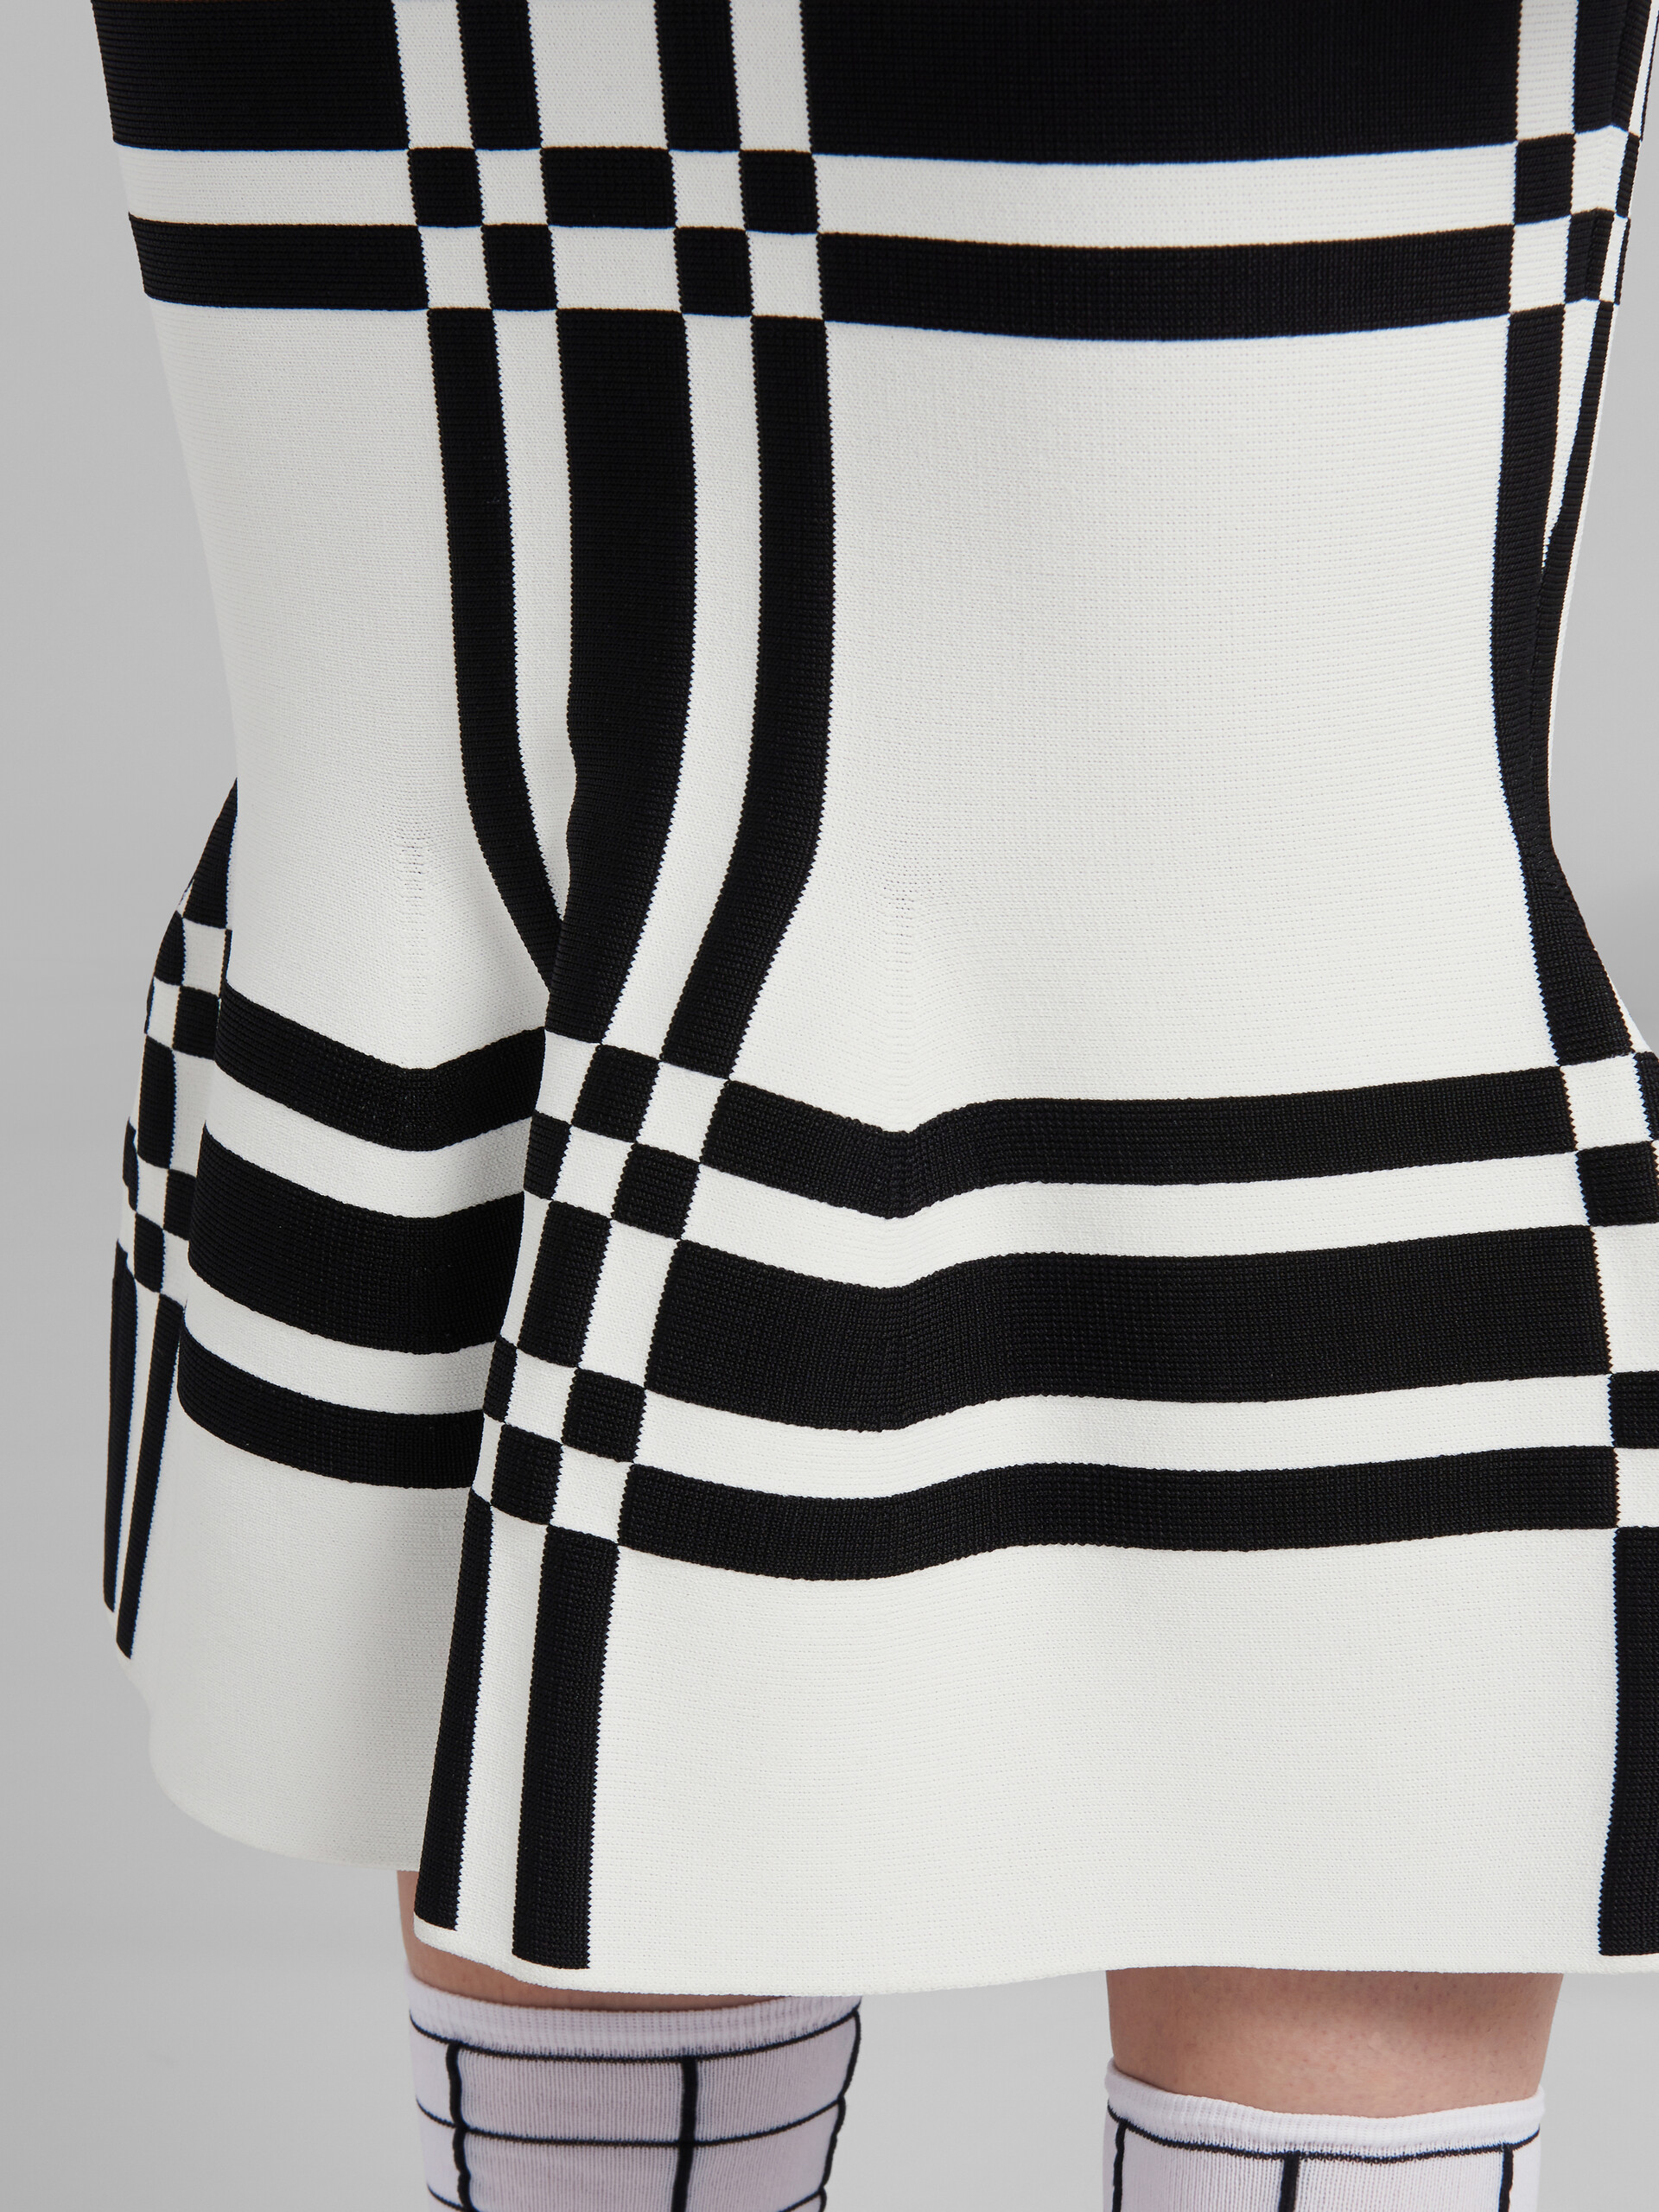 White checked viscose sheath skirt with flounce hem - Skirts - Image 4